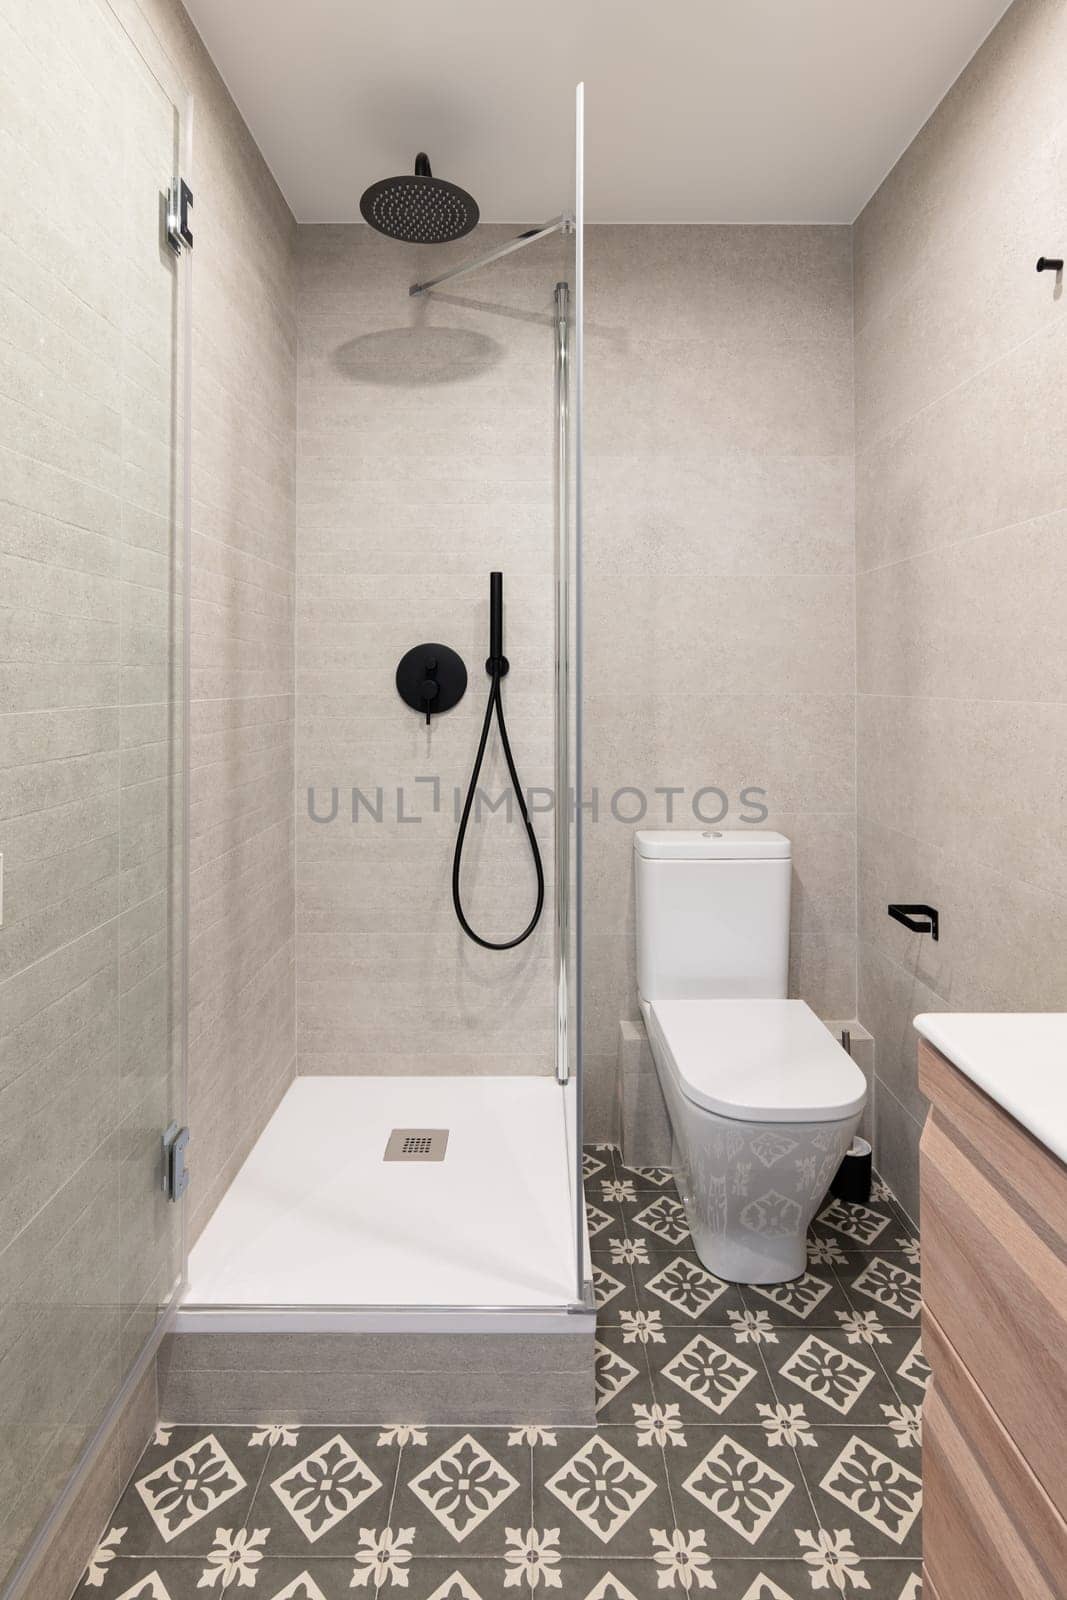 Stylish shower unit and ceramic toilet bowl in bathroom by apavlin